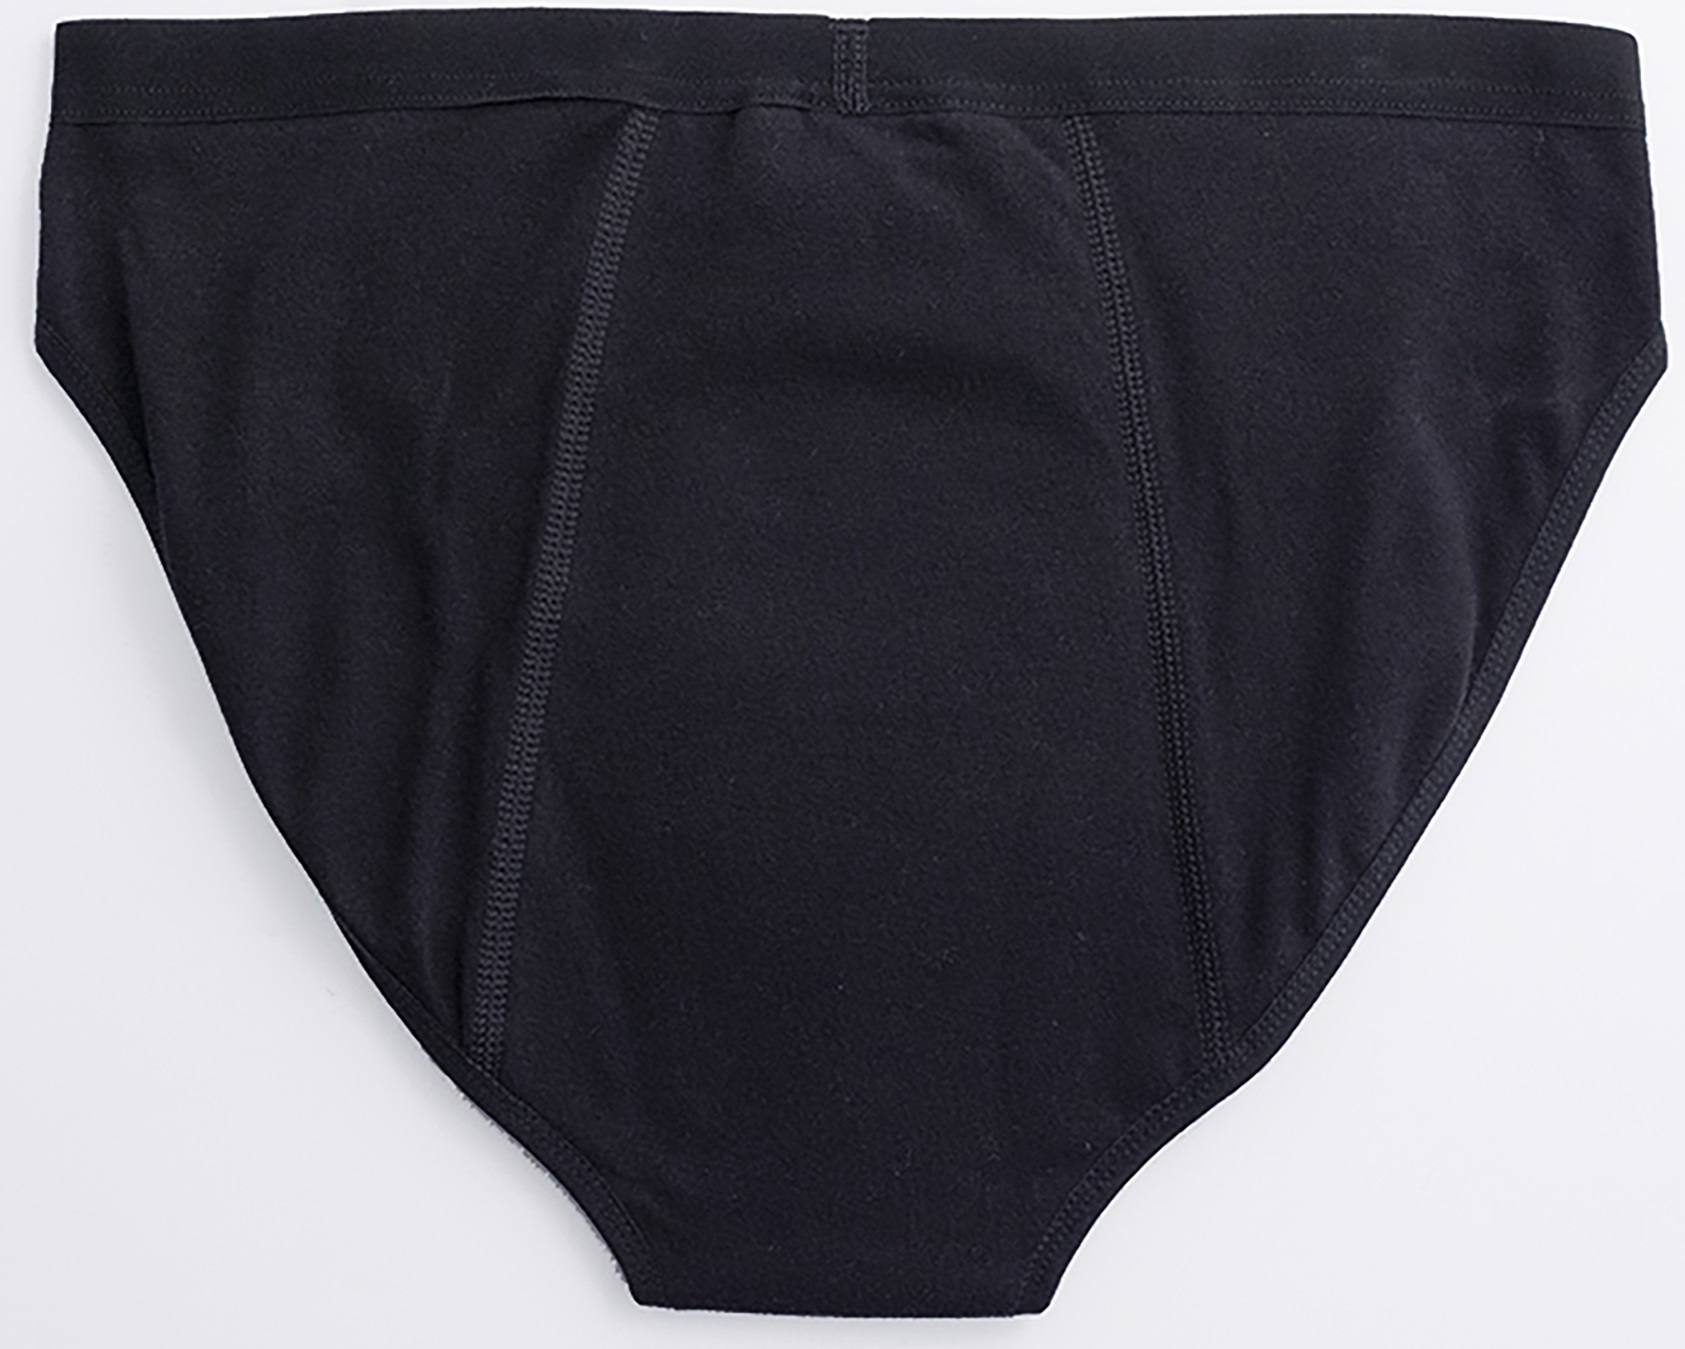 https://lyko.com/globalassets/product-images/imse-period-underwear-bikini-xl-heavy-flow-black-3392-123-0005_2.jpg?ref=4CCF567AE5